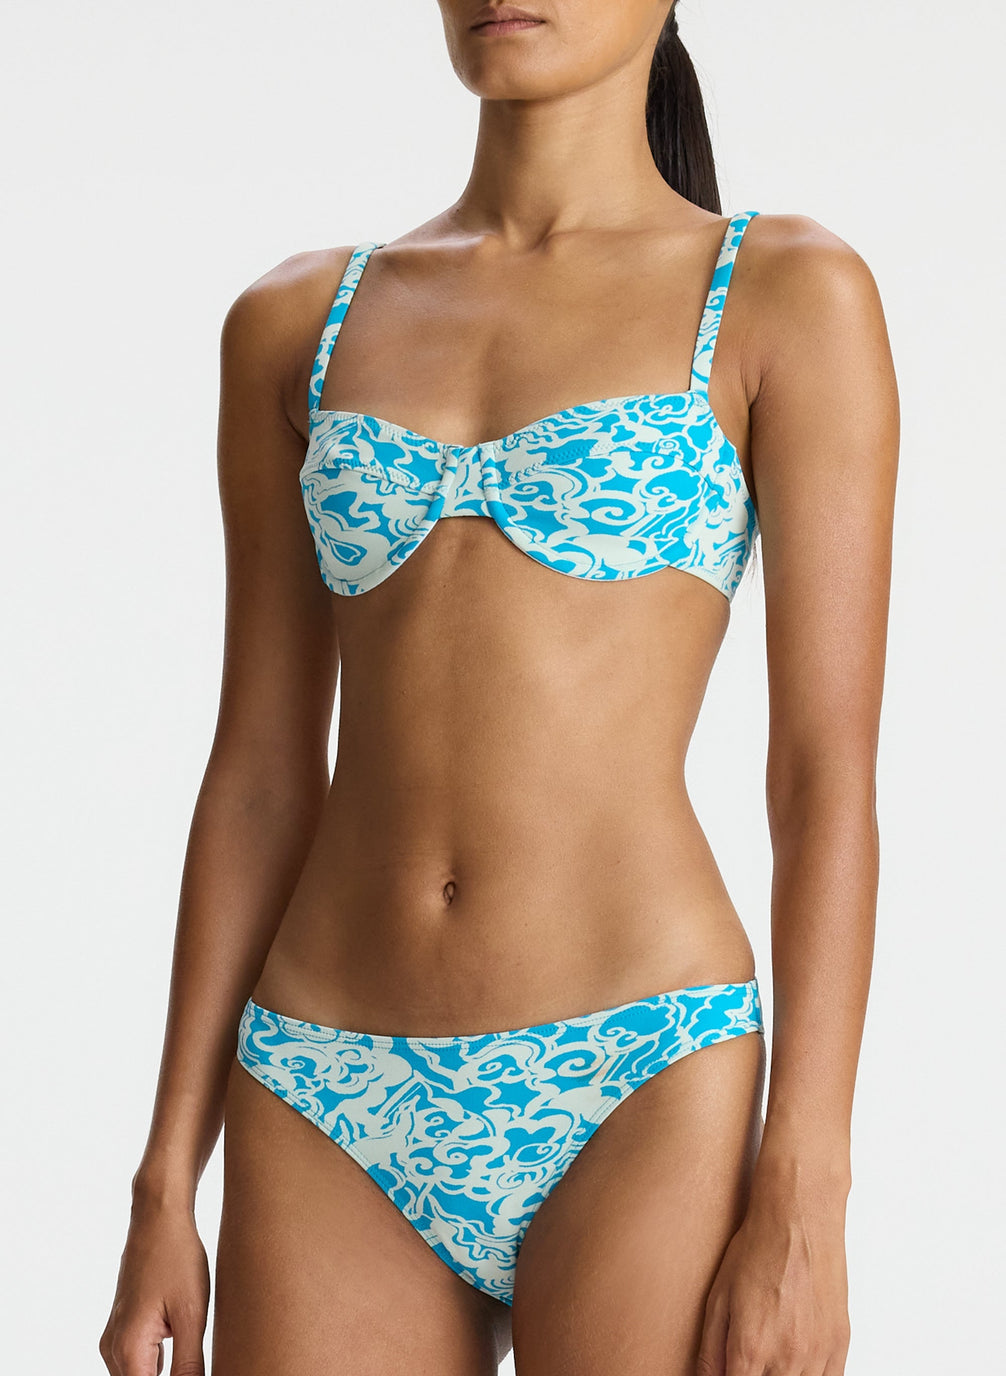 detail view of woman wearing aqua printed bikini set